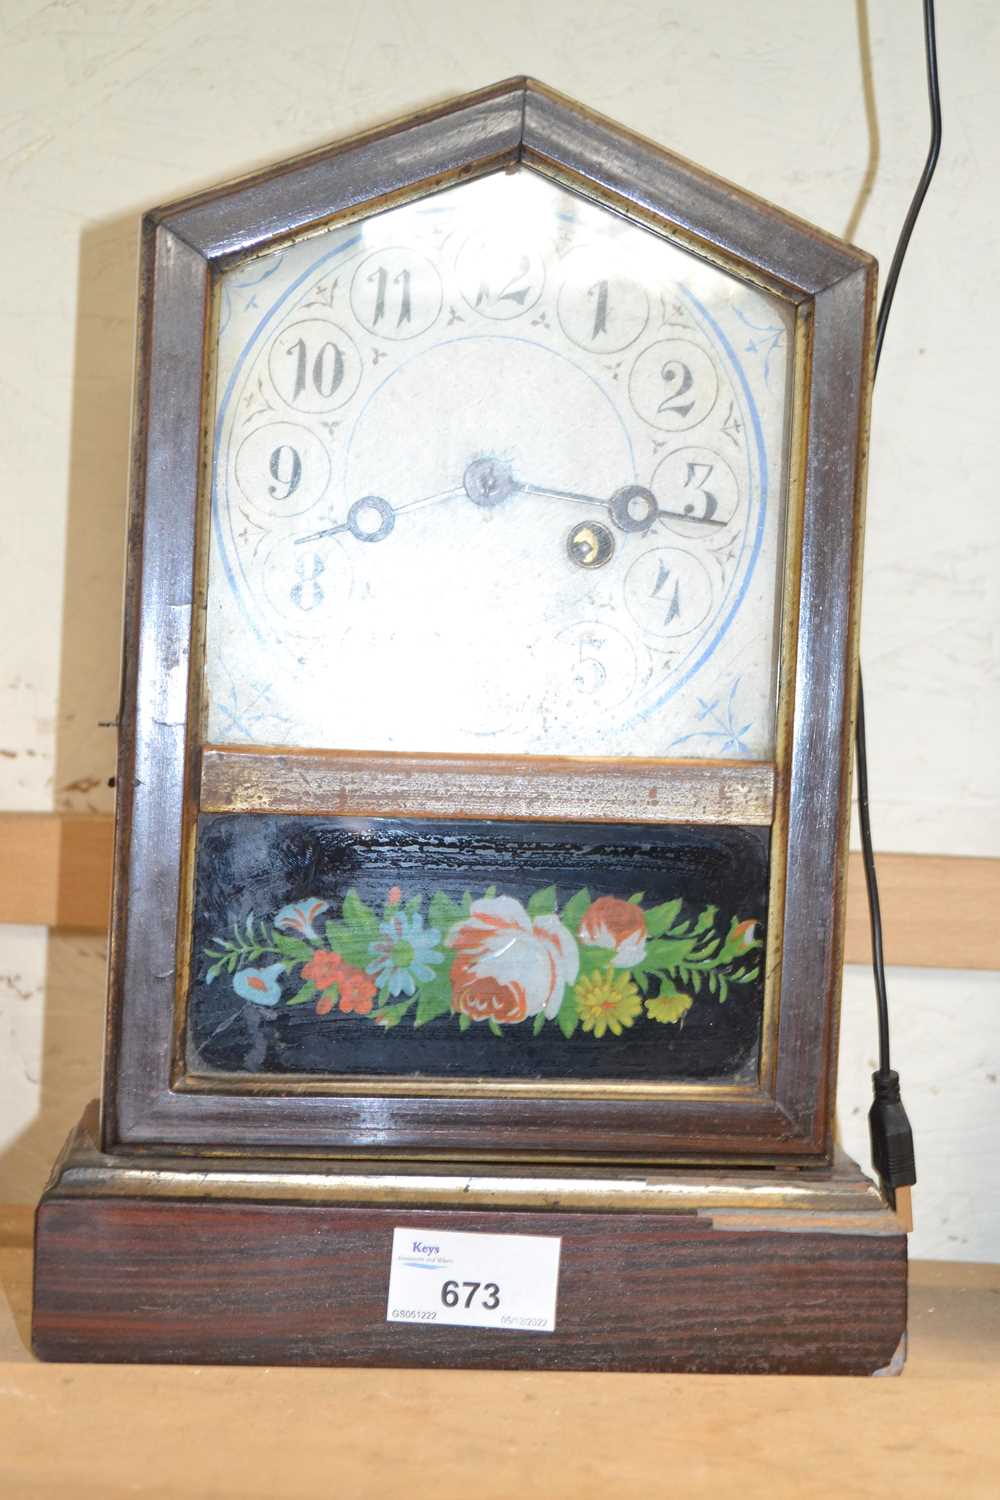 Musterschutz mantel clock with floral decoration